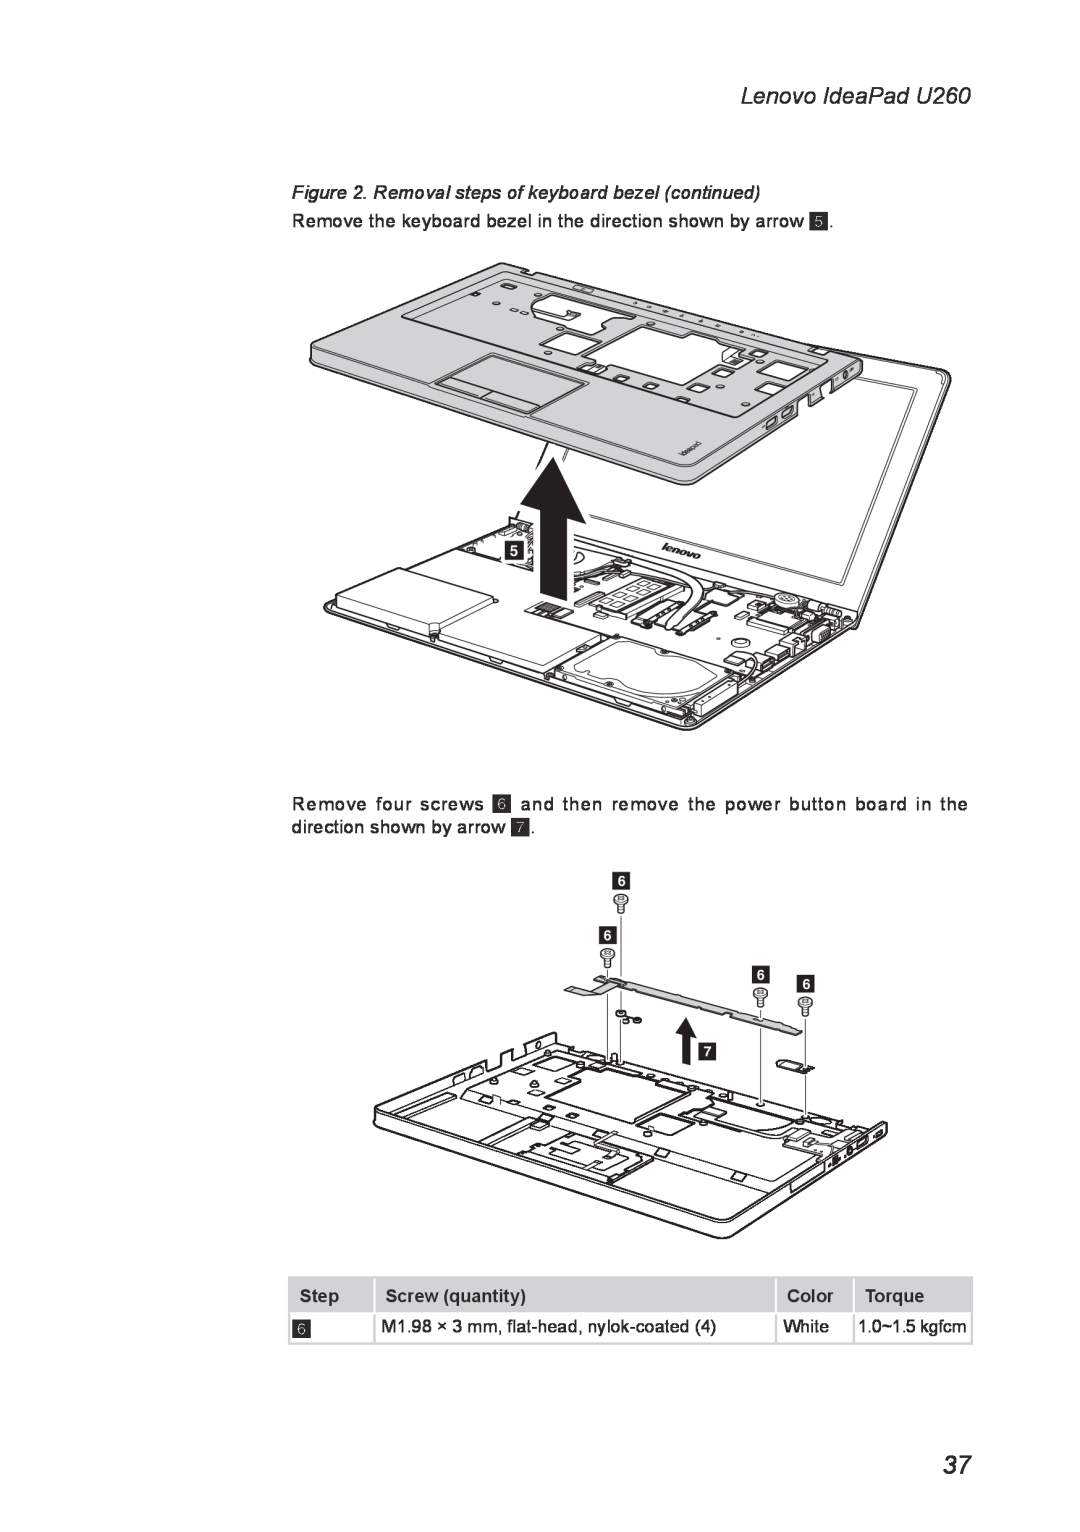 Lenovo manual Lenovo IdeaPad U260, Removal steps of keyboard bezel continued, Step, Screw quantity, Color, Torque 